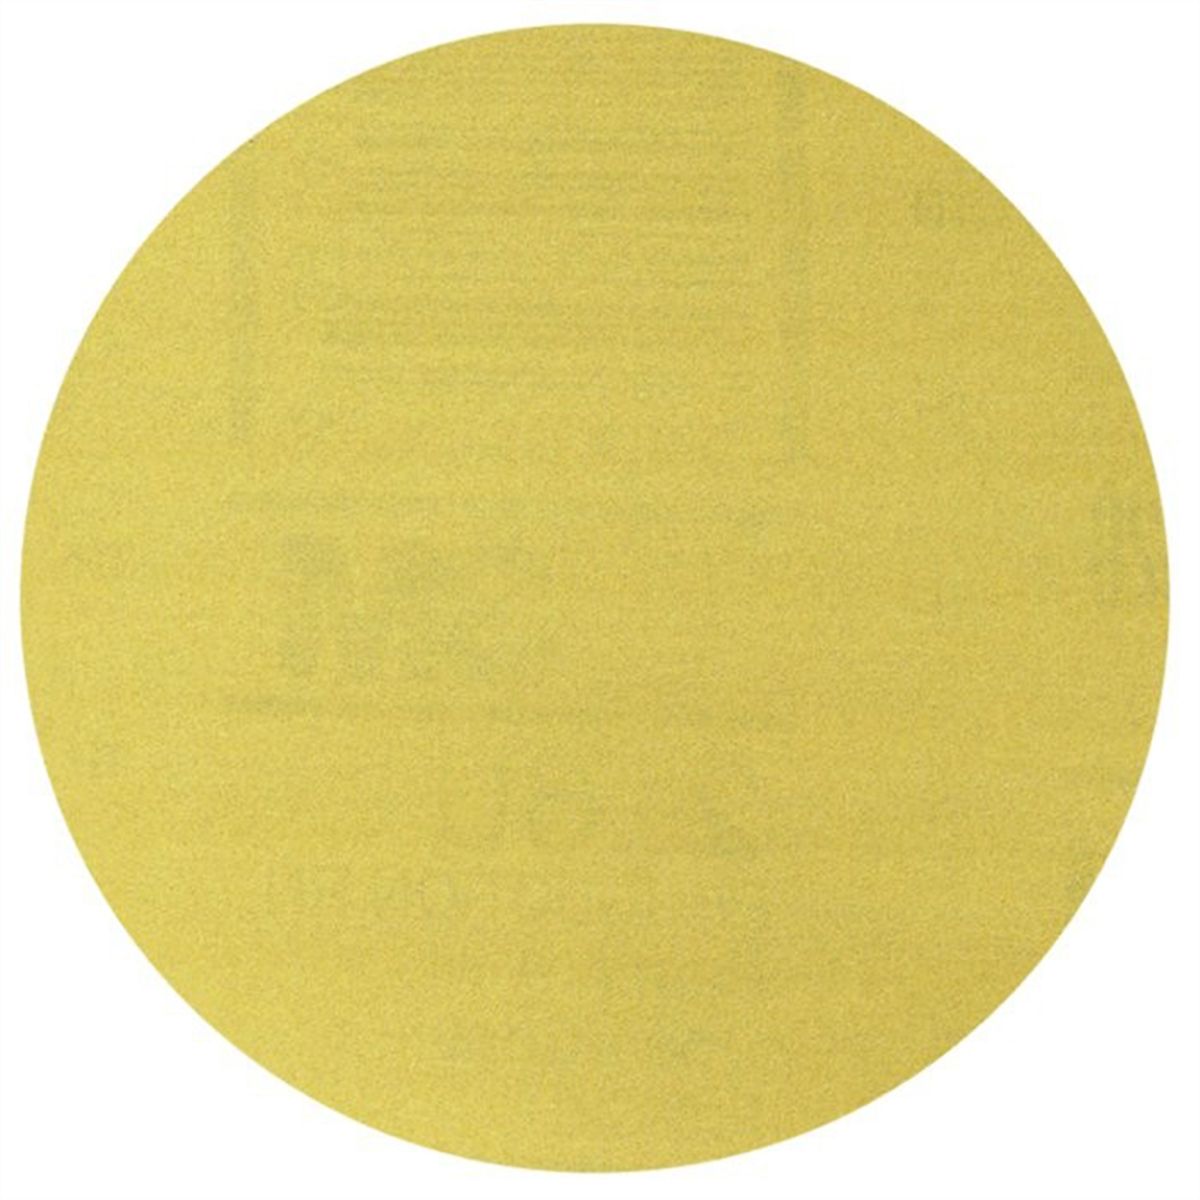 StikitT Gold Disc Roll - 180 Grade - 6 In